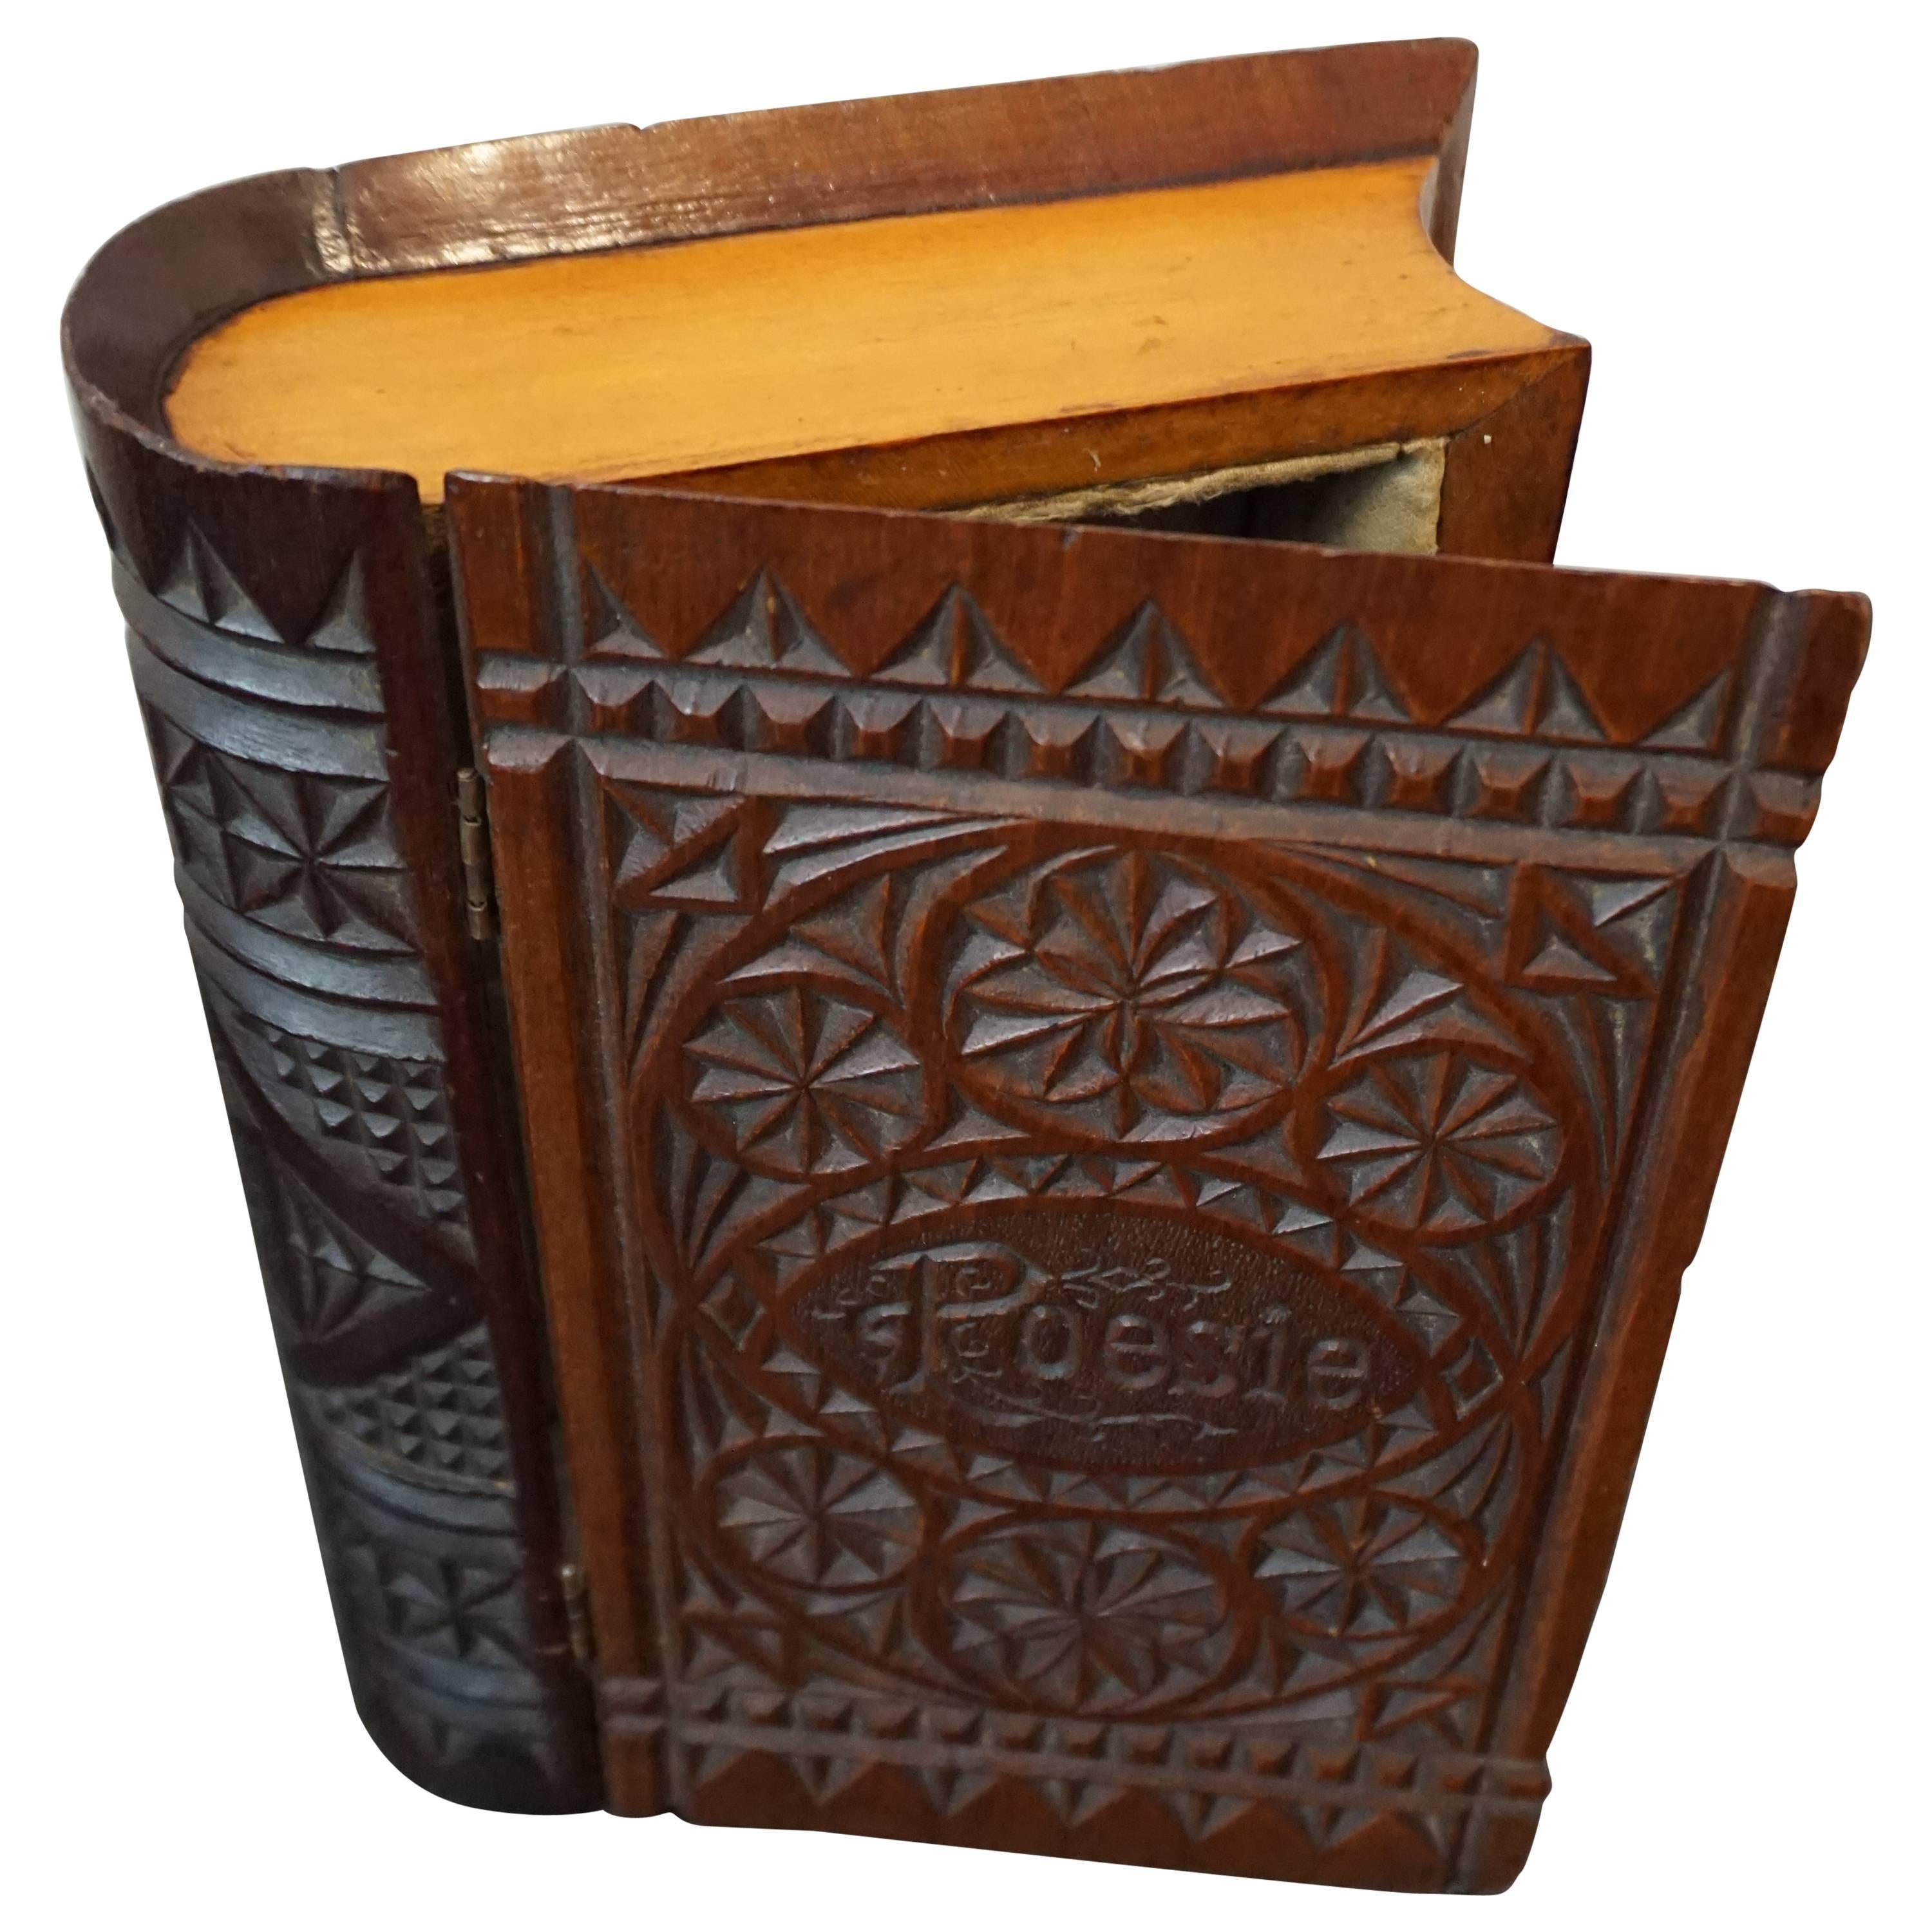 Rare mid 19th Century Carved Mahogany German Kerbschnitt Book Shaped Jewelry Box